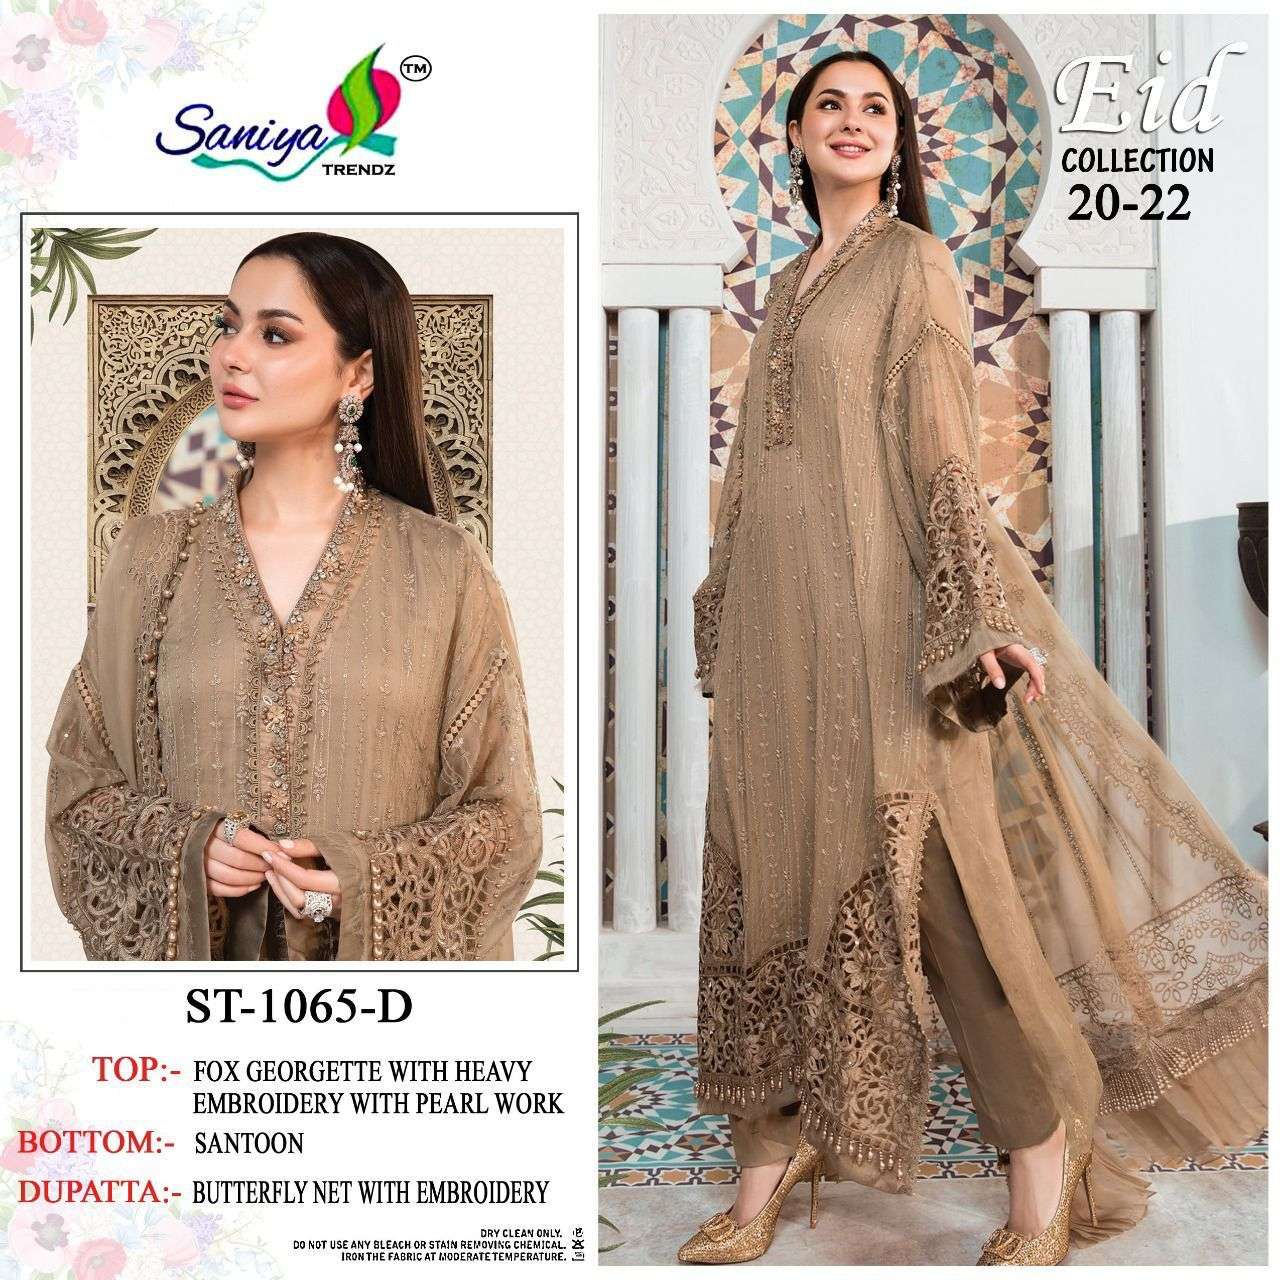 Saniya Trendz Eid Collection 20-22 ST-1065-D